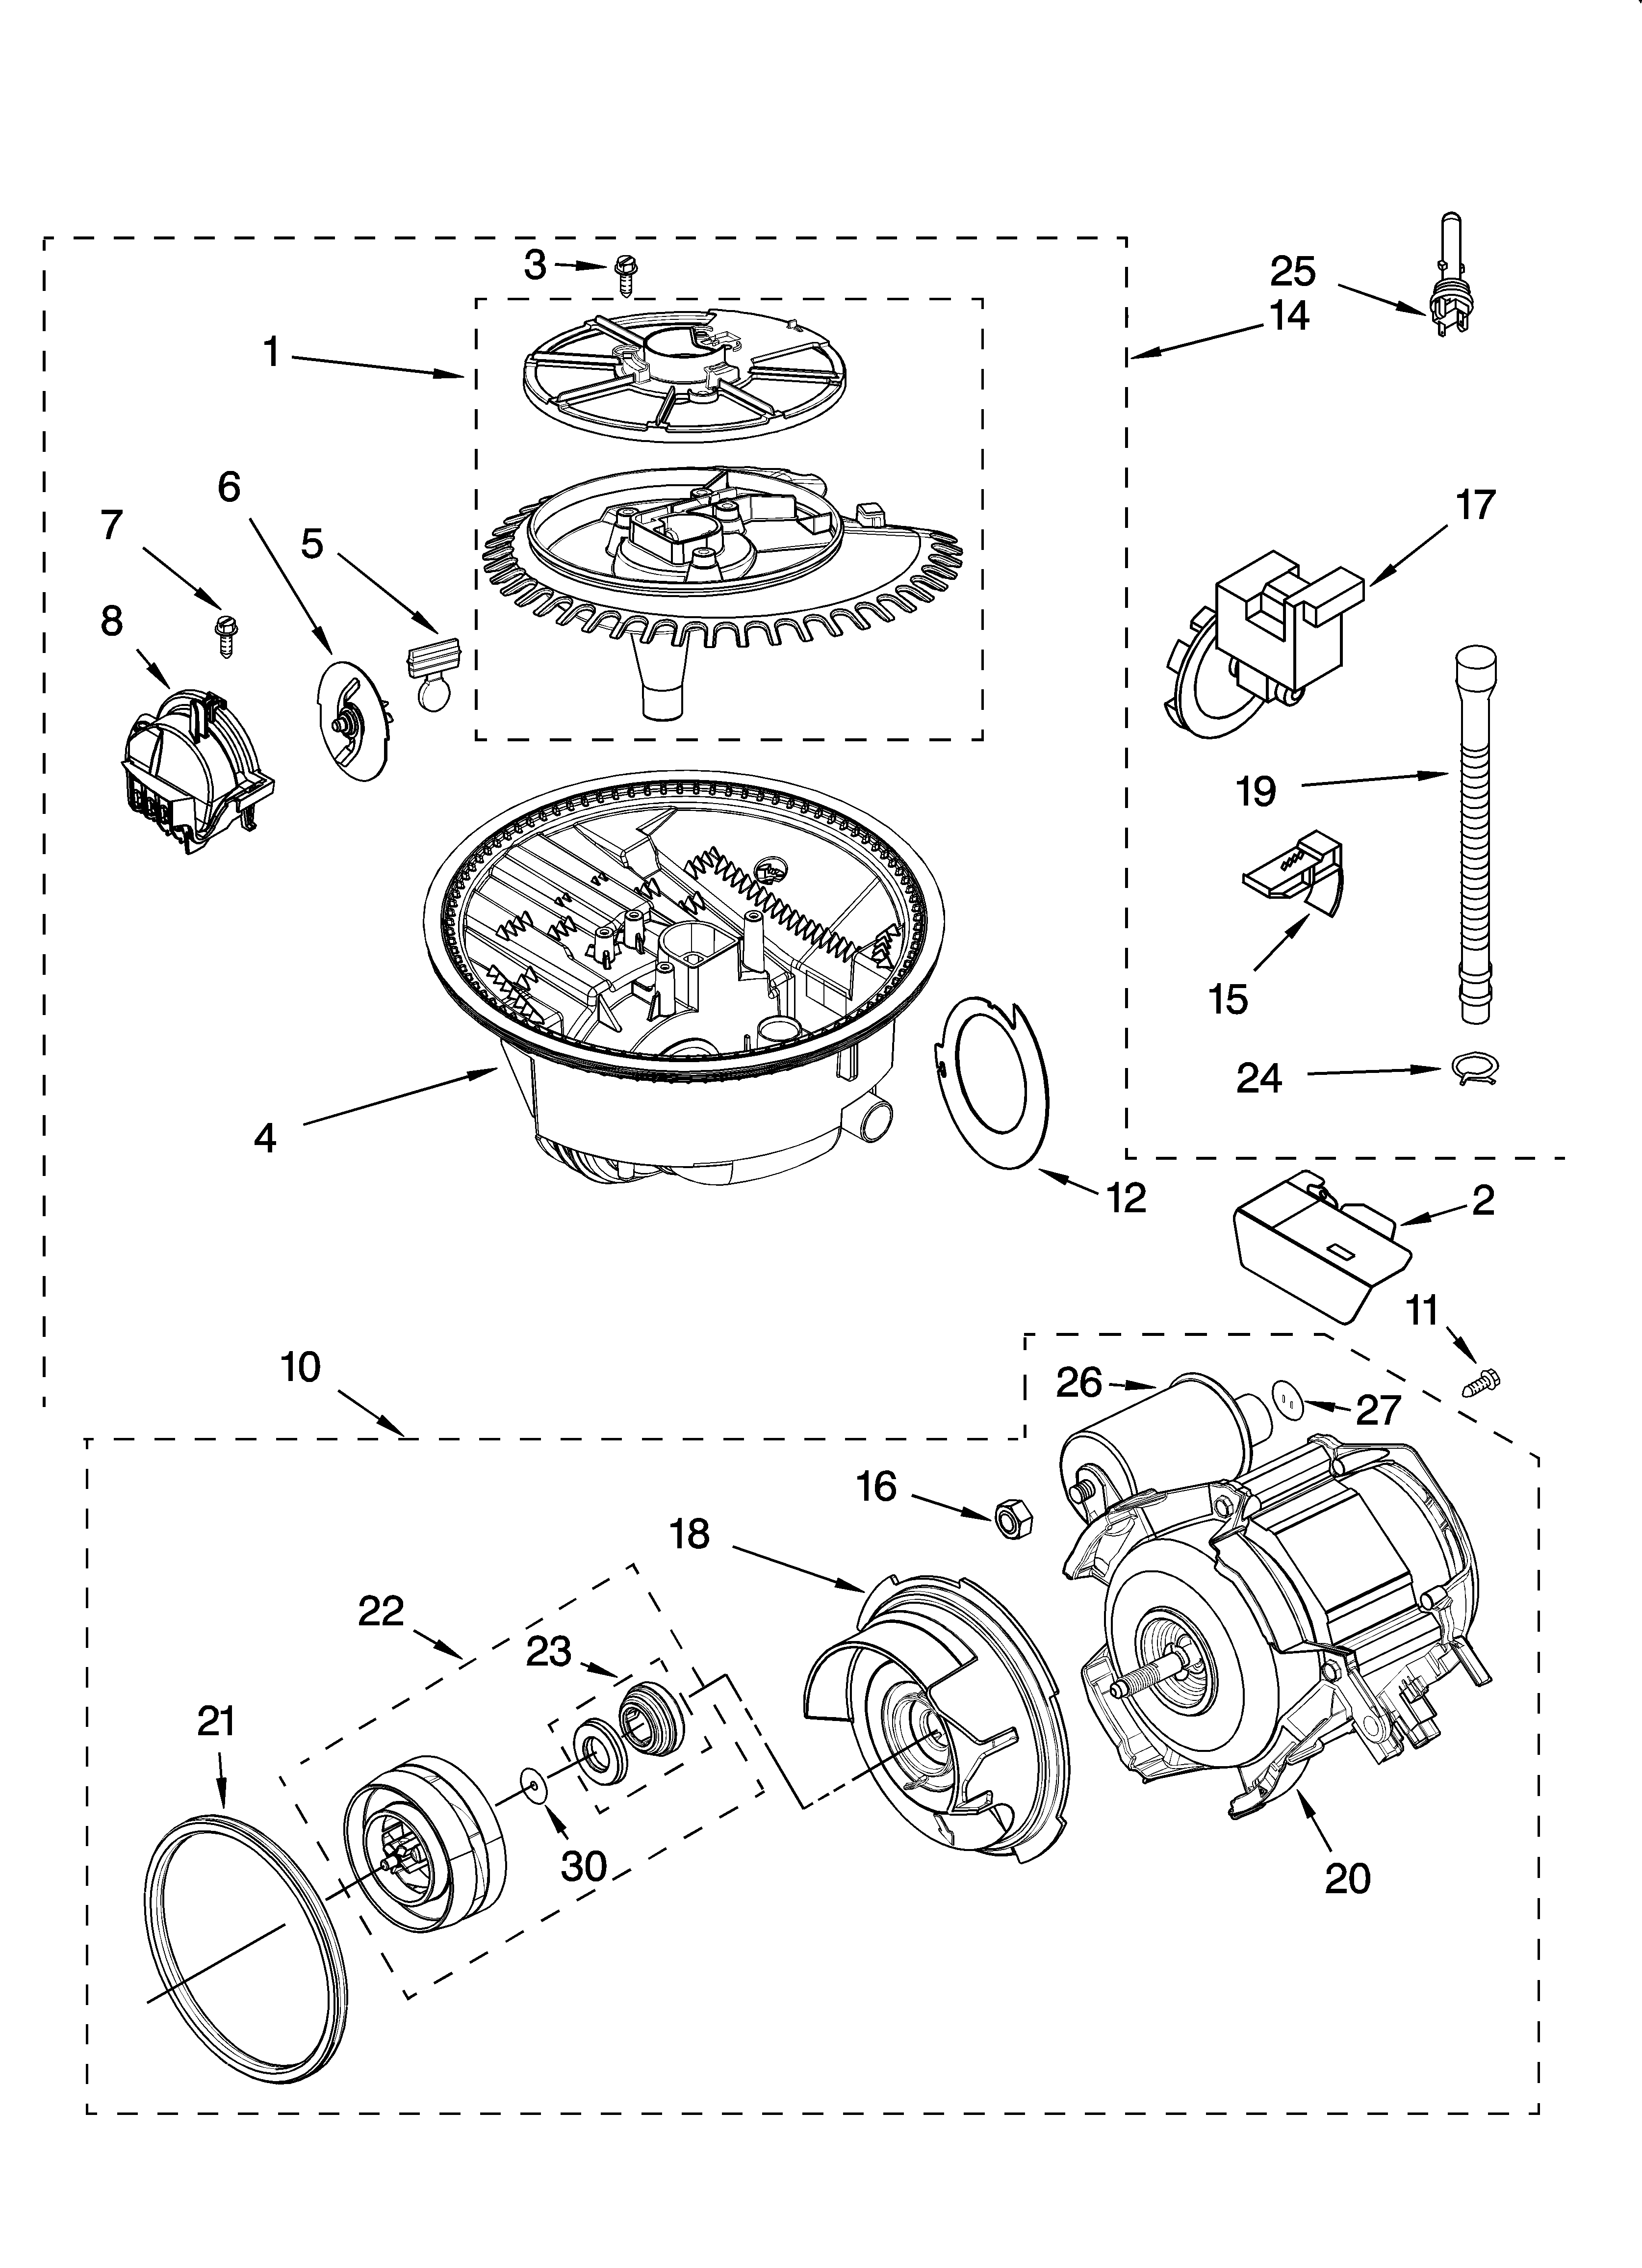 Kenmore Ultra Wash Dishwasher Model 665 Parts Diagram